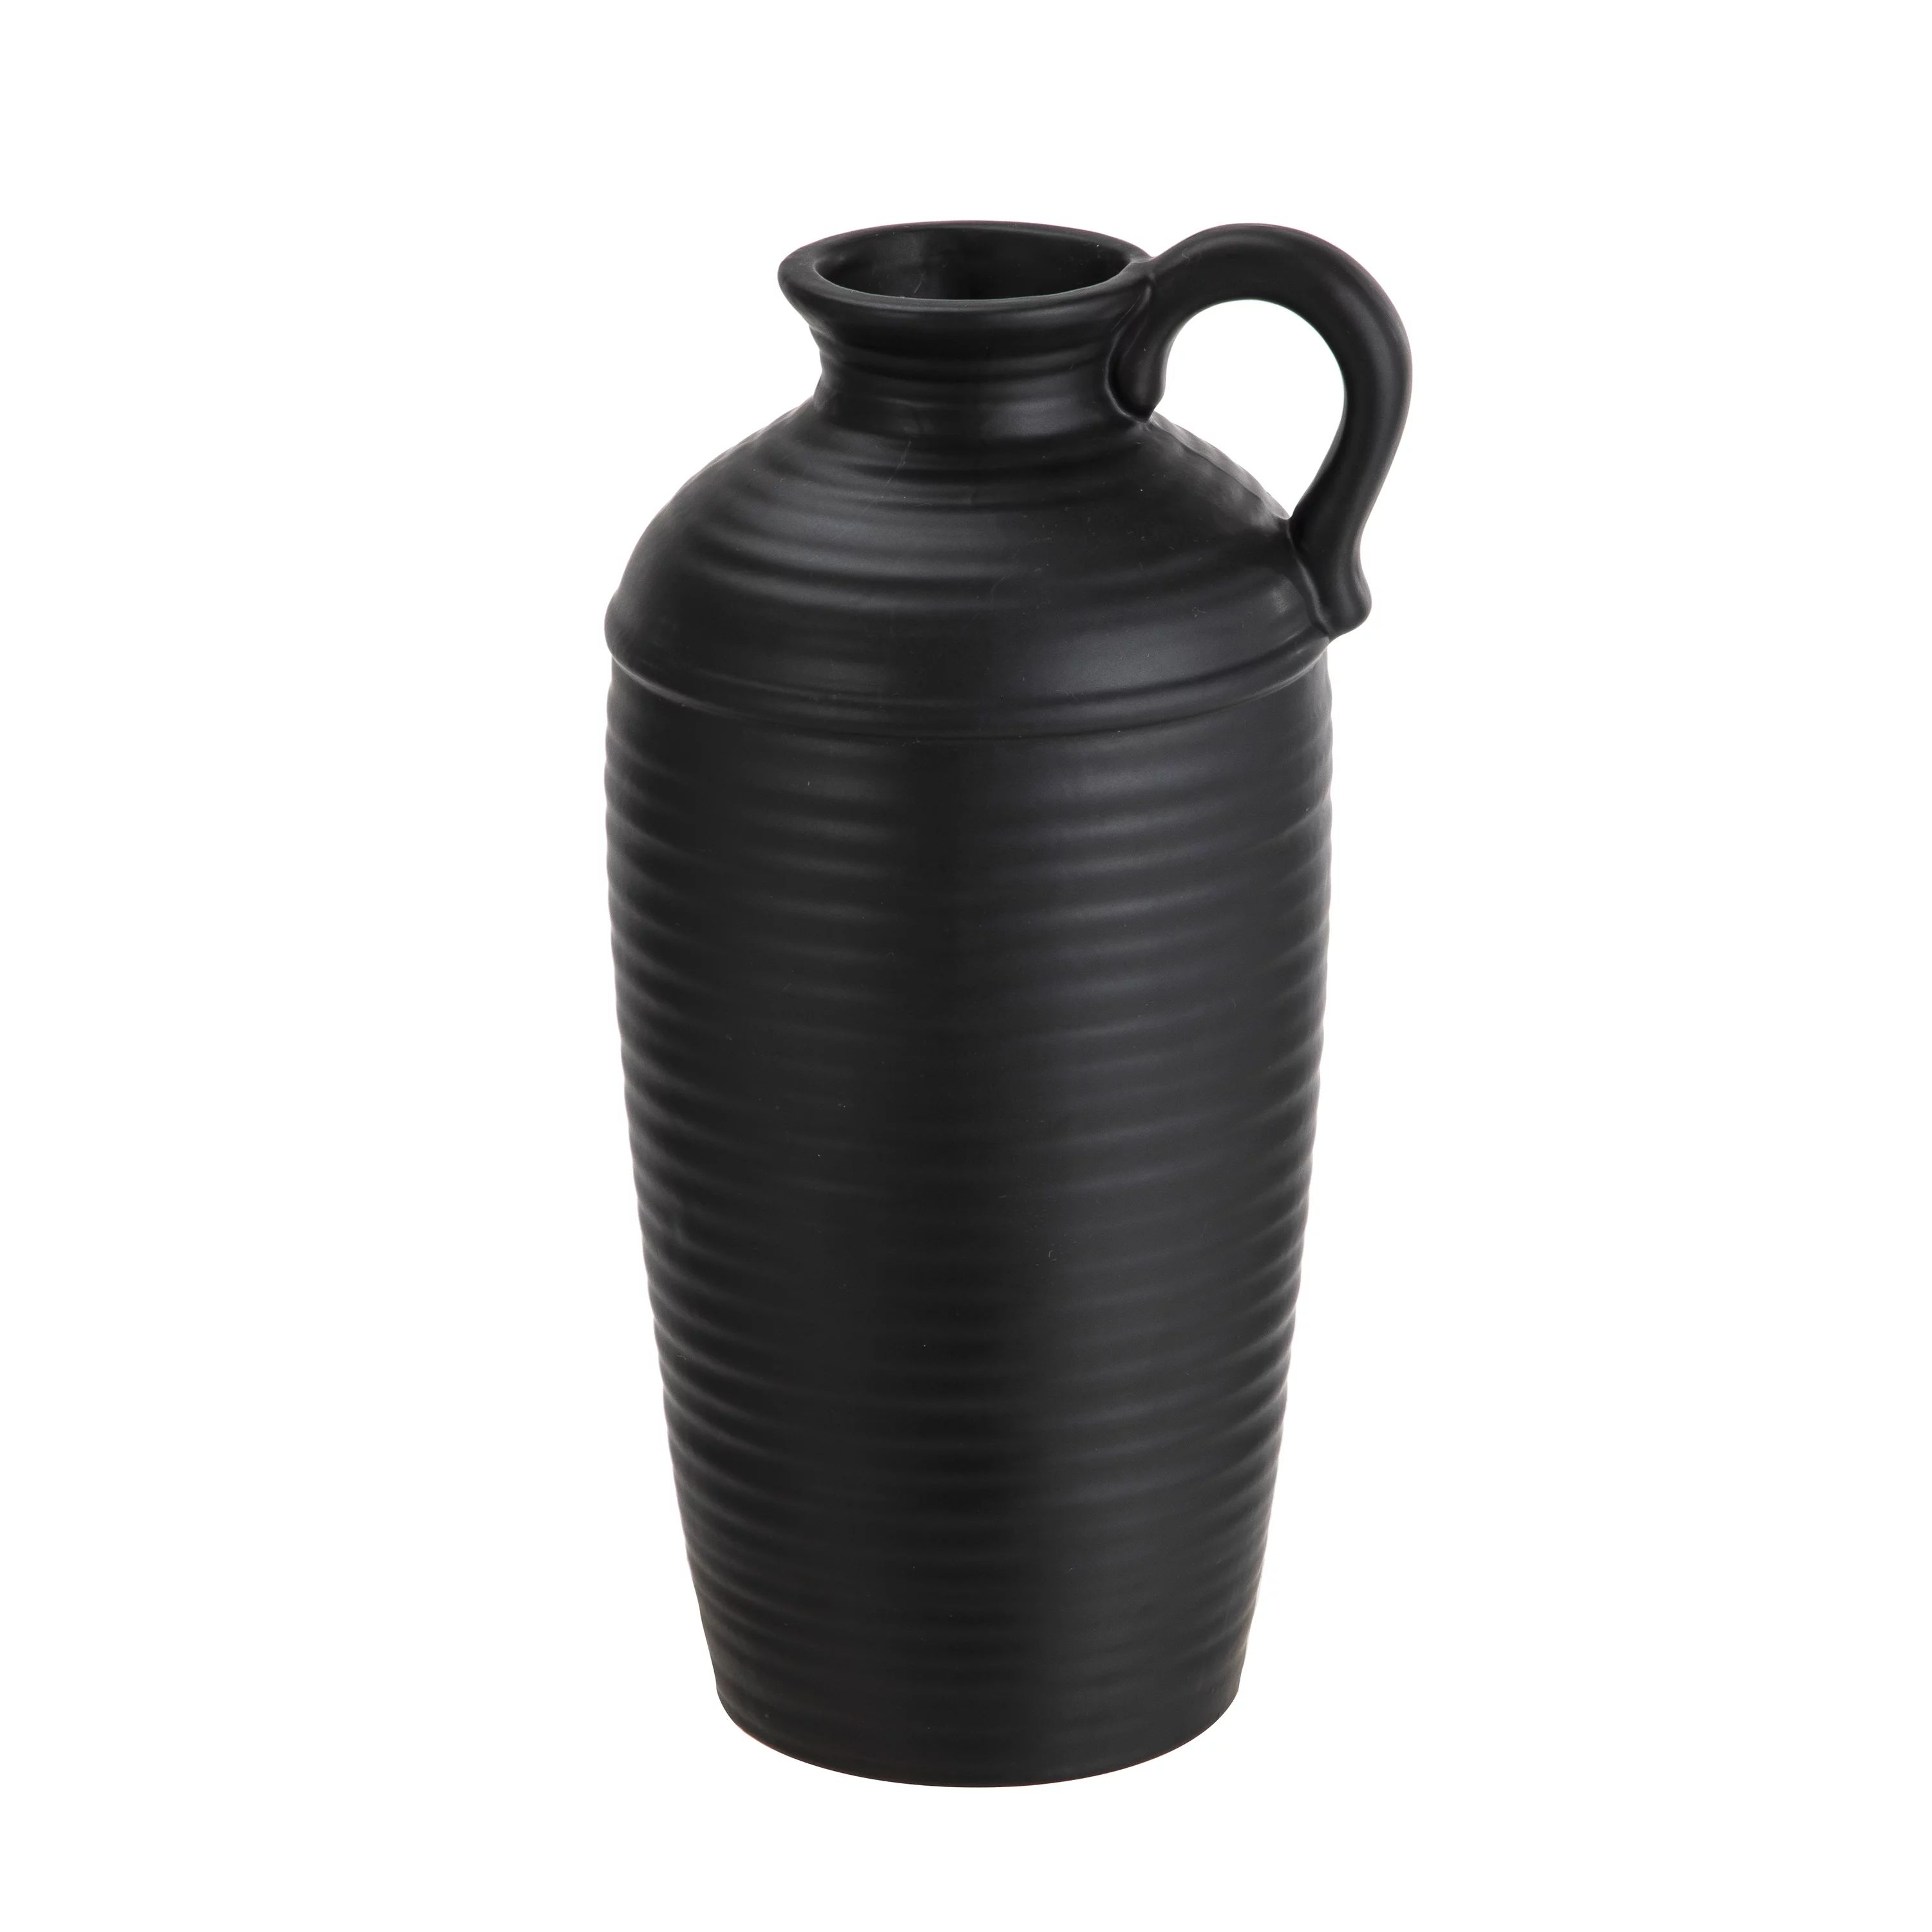 Mainstays 5.23" x 4.8" x 10" Black Ceramic Decorative Jug With Handle | Walmart (US)